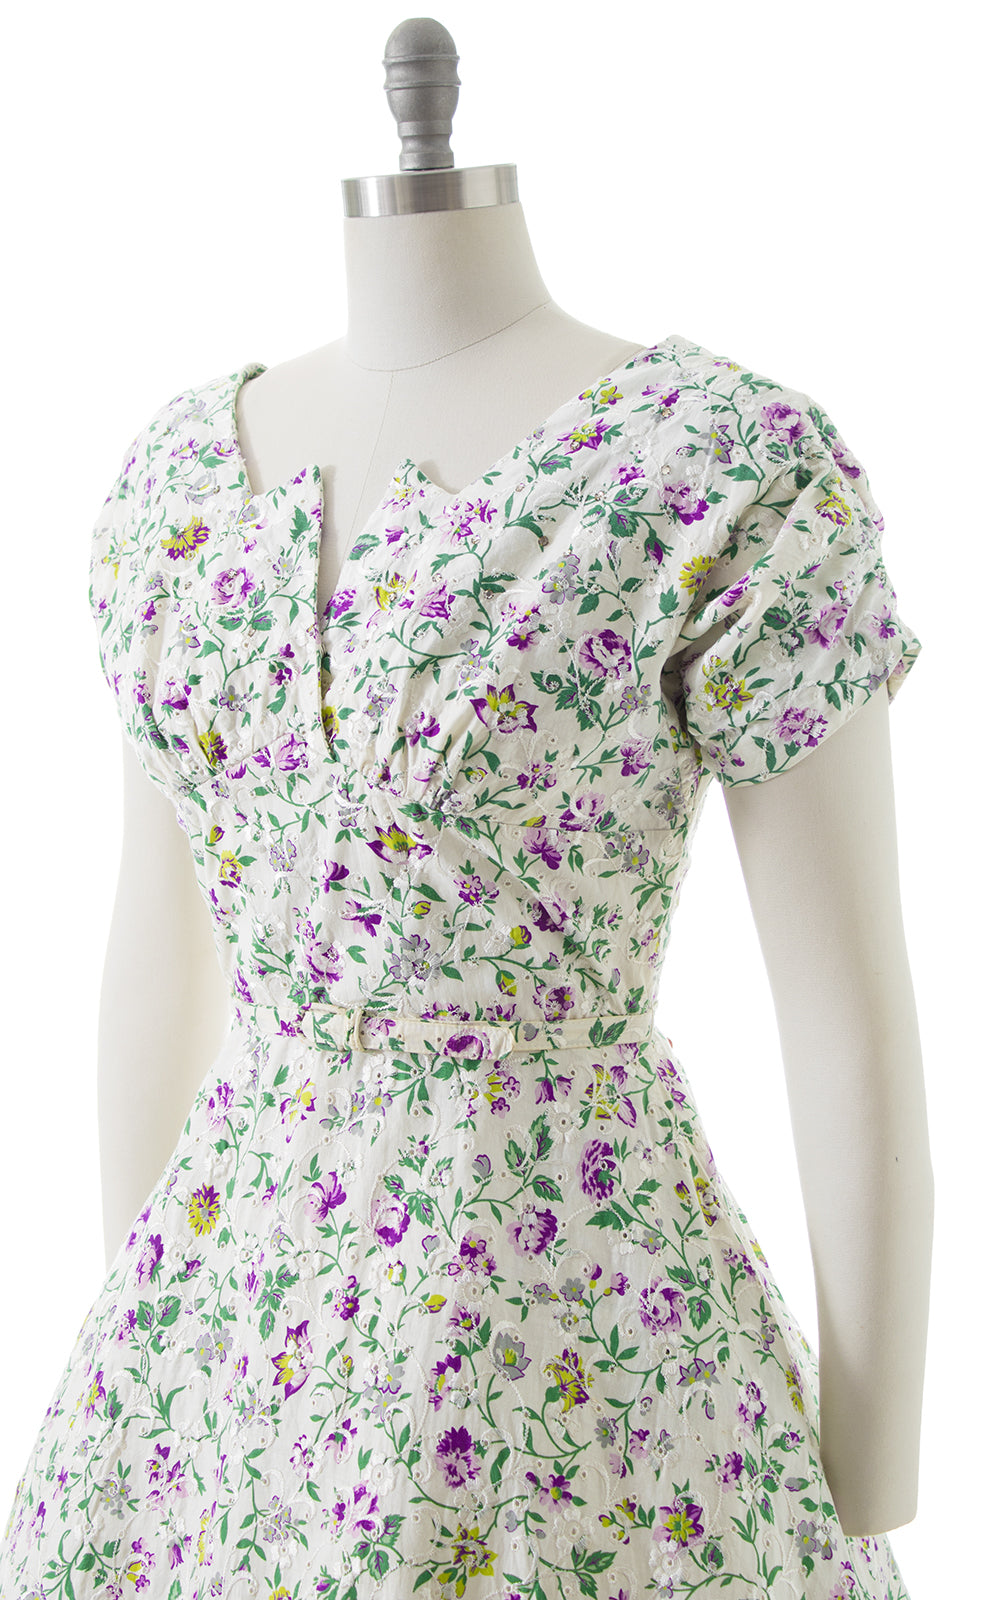 1950s Floral Embroidered Eyelet Dress